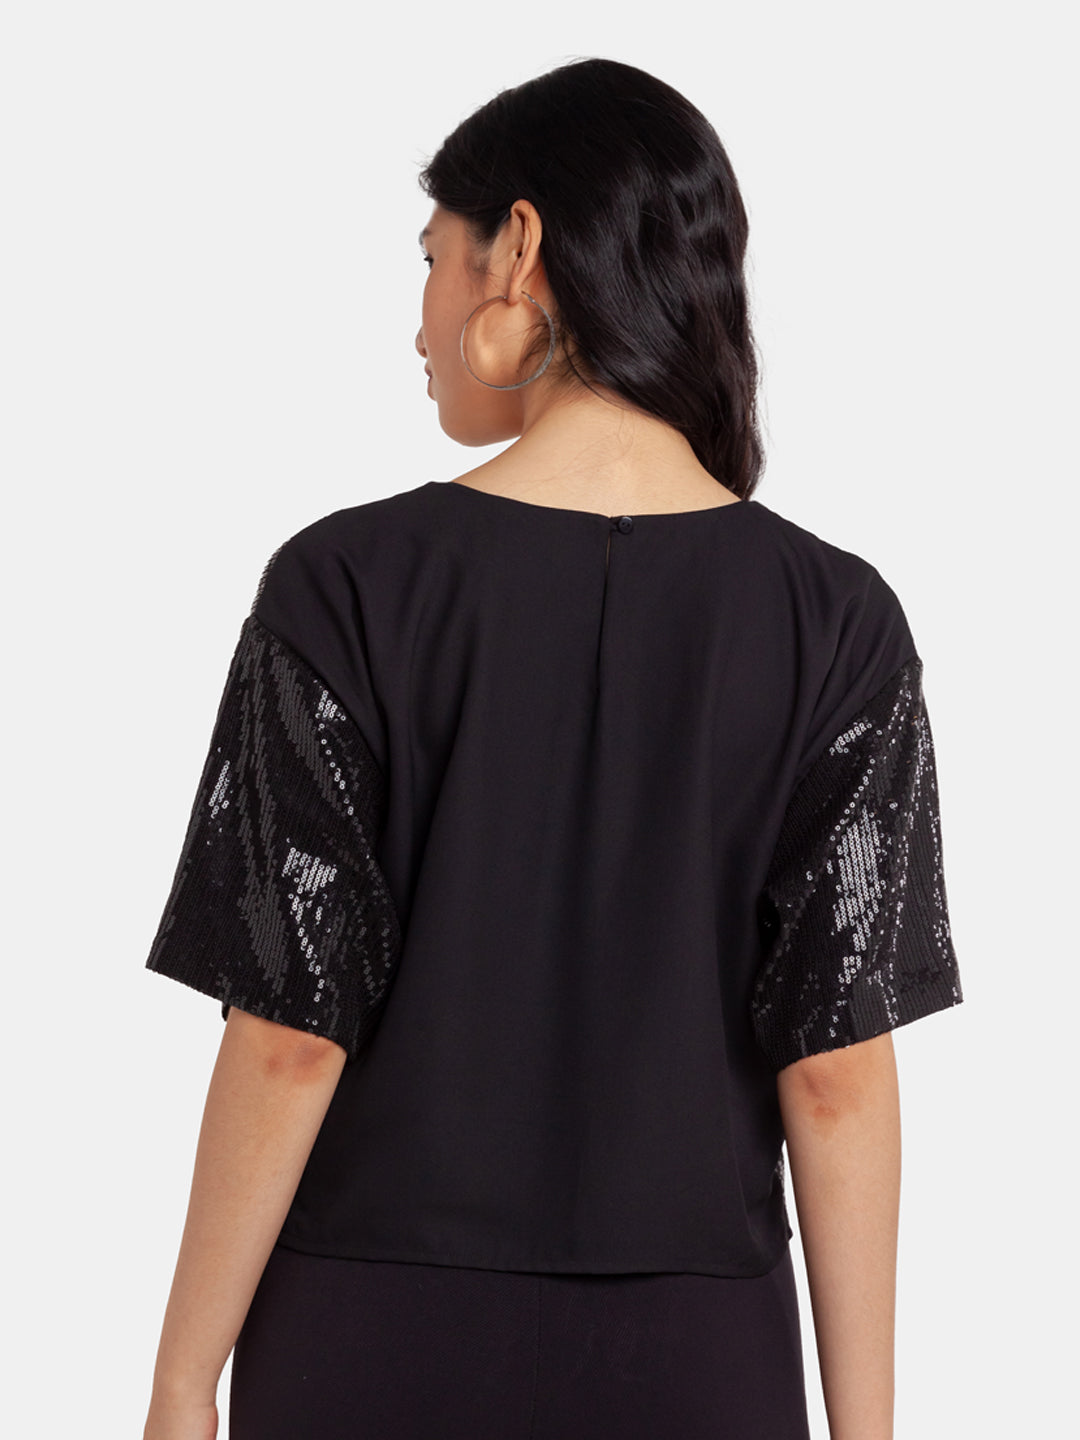 Black Embellished Cropped Top For Women